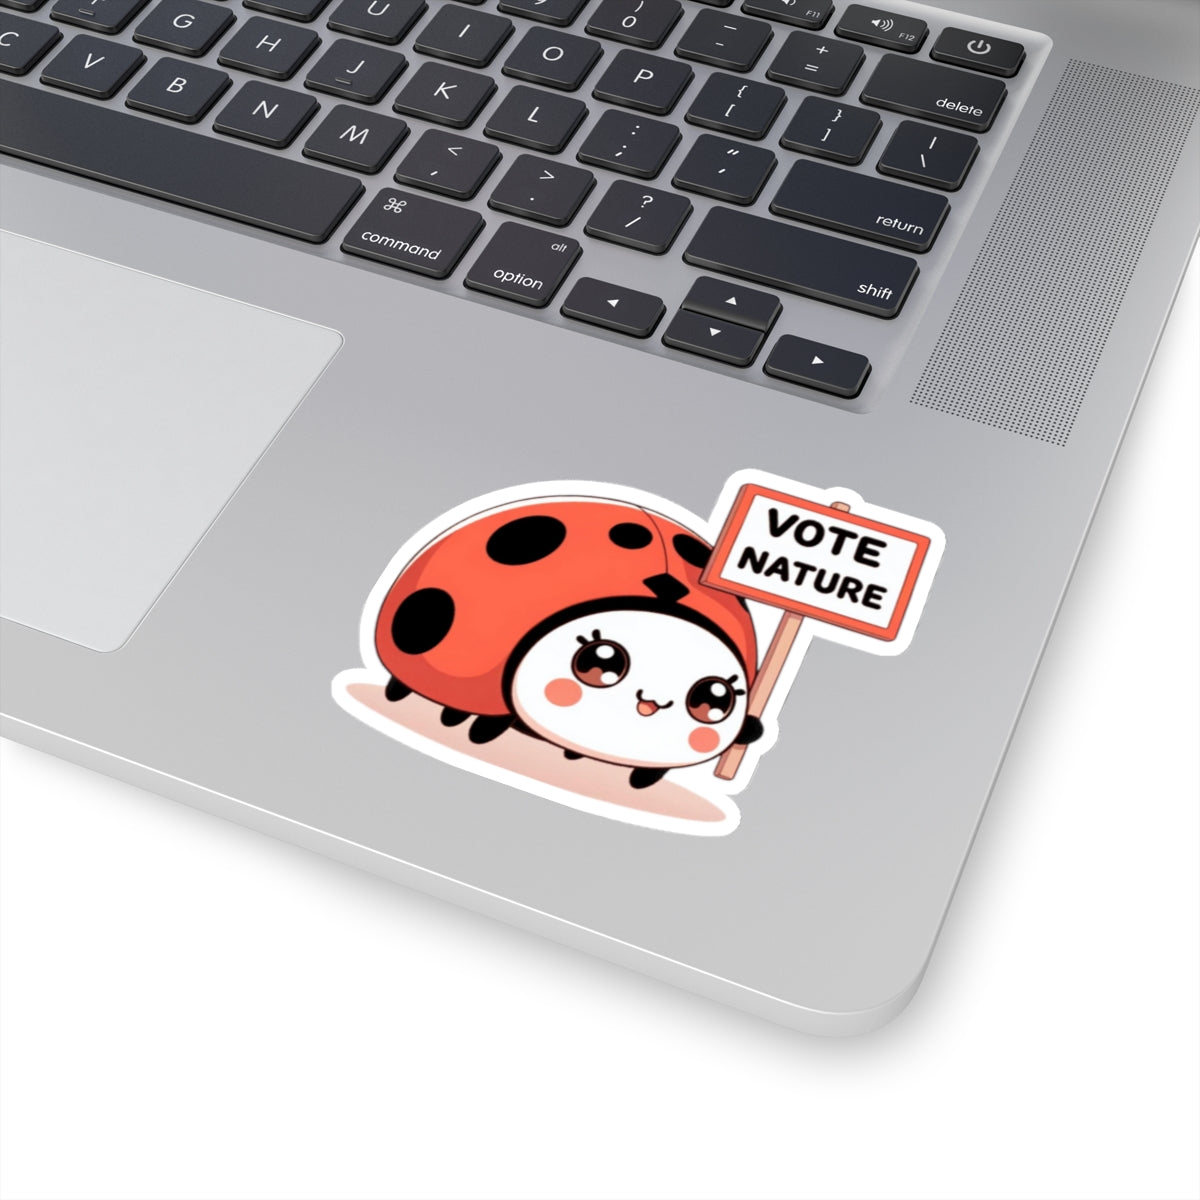 Inspirational Cute Ladybug Statement vinyl Sticker: Vote Nature! for laptop, kindle, phone, ipad, instrument case, notebook, mood board